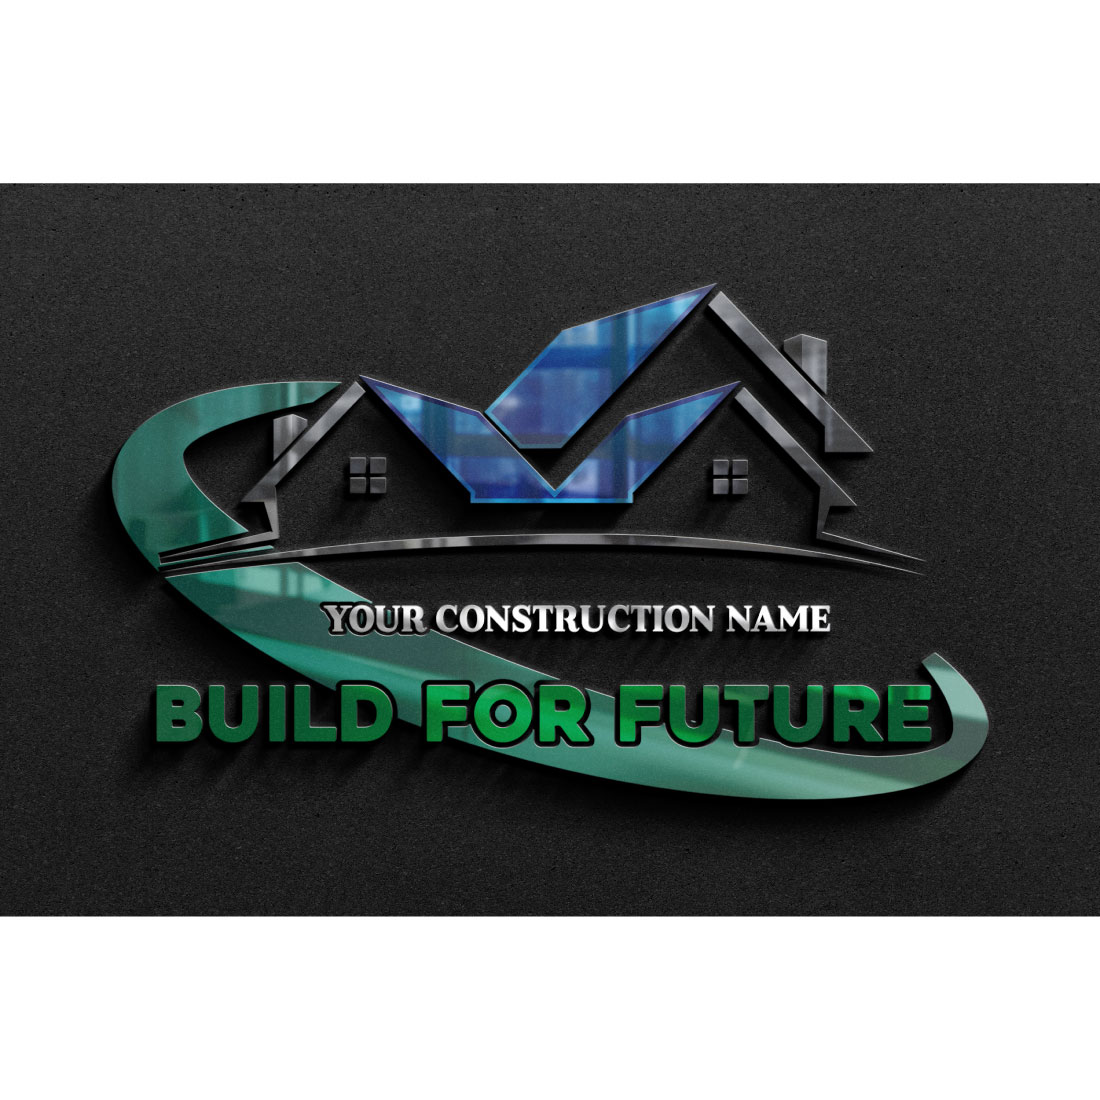 Construction logo design preview image.